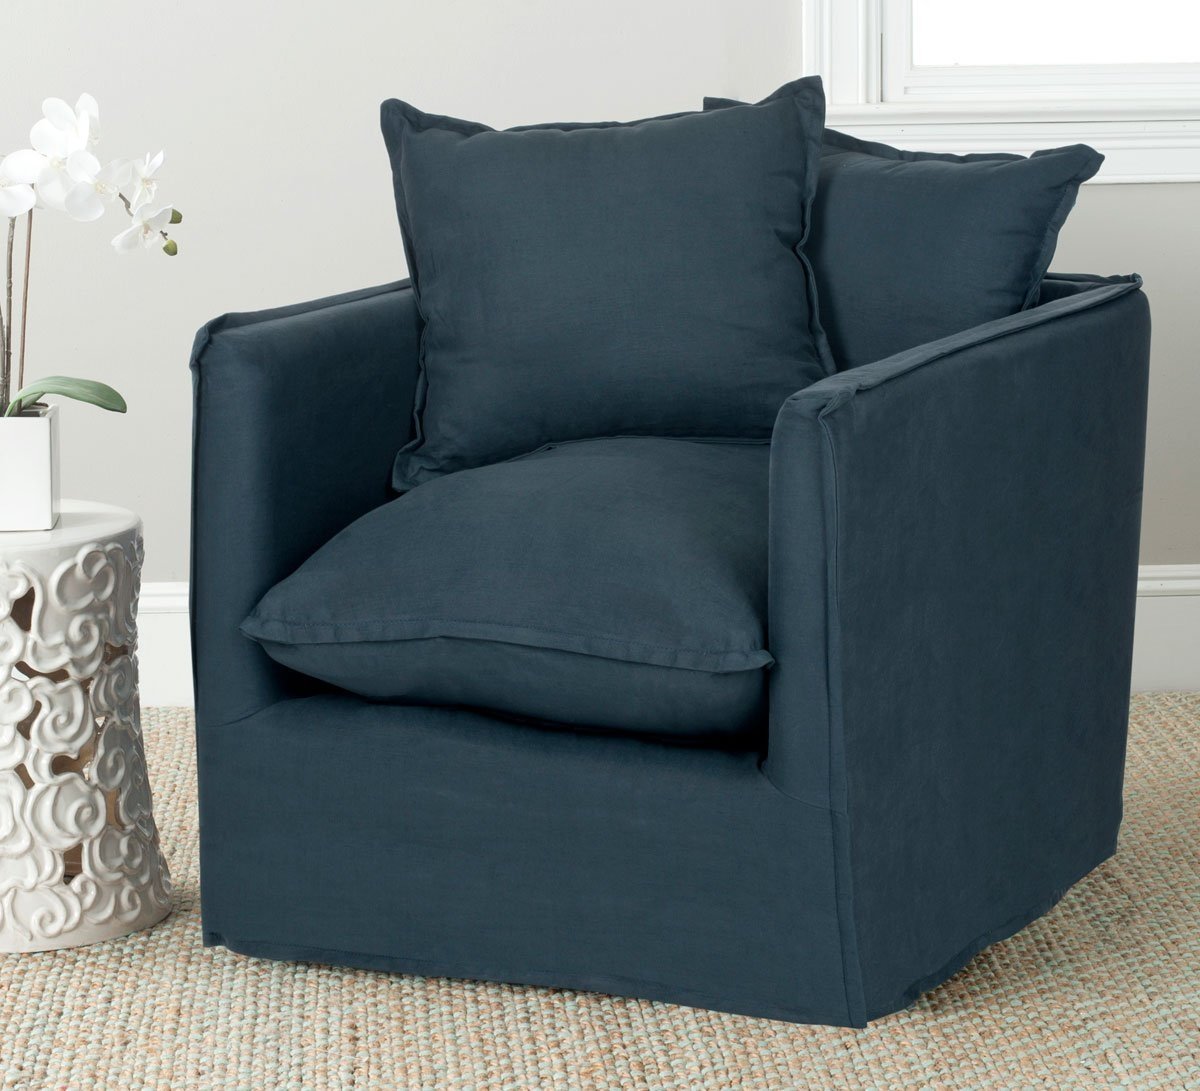 Joey Arm Chair - Blue/Black - Safavieh - Image 1